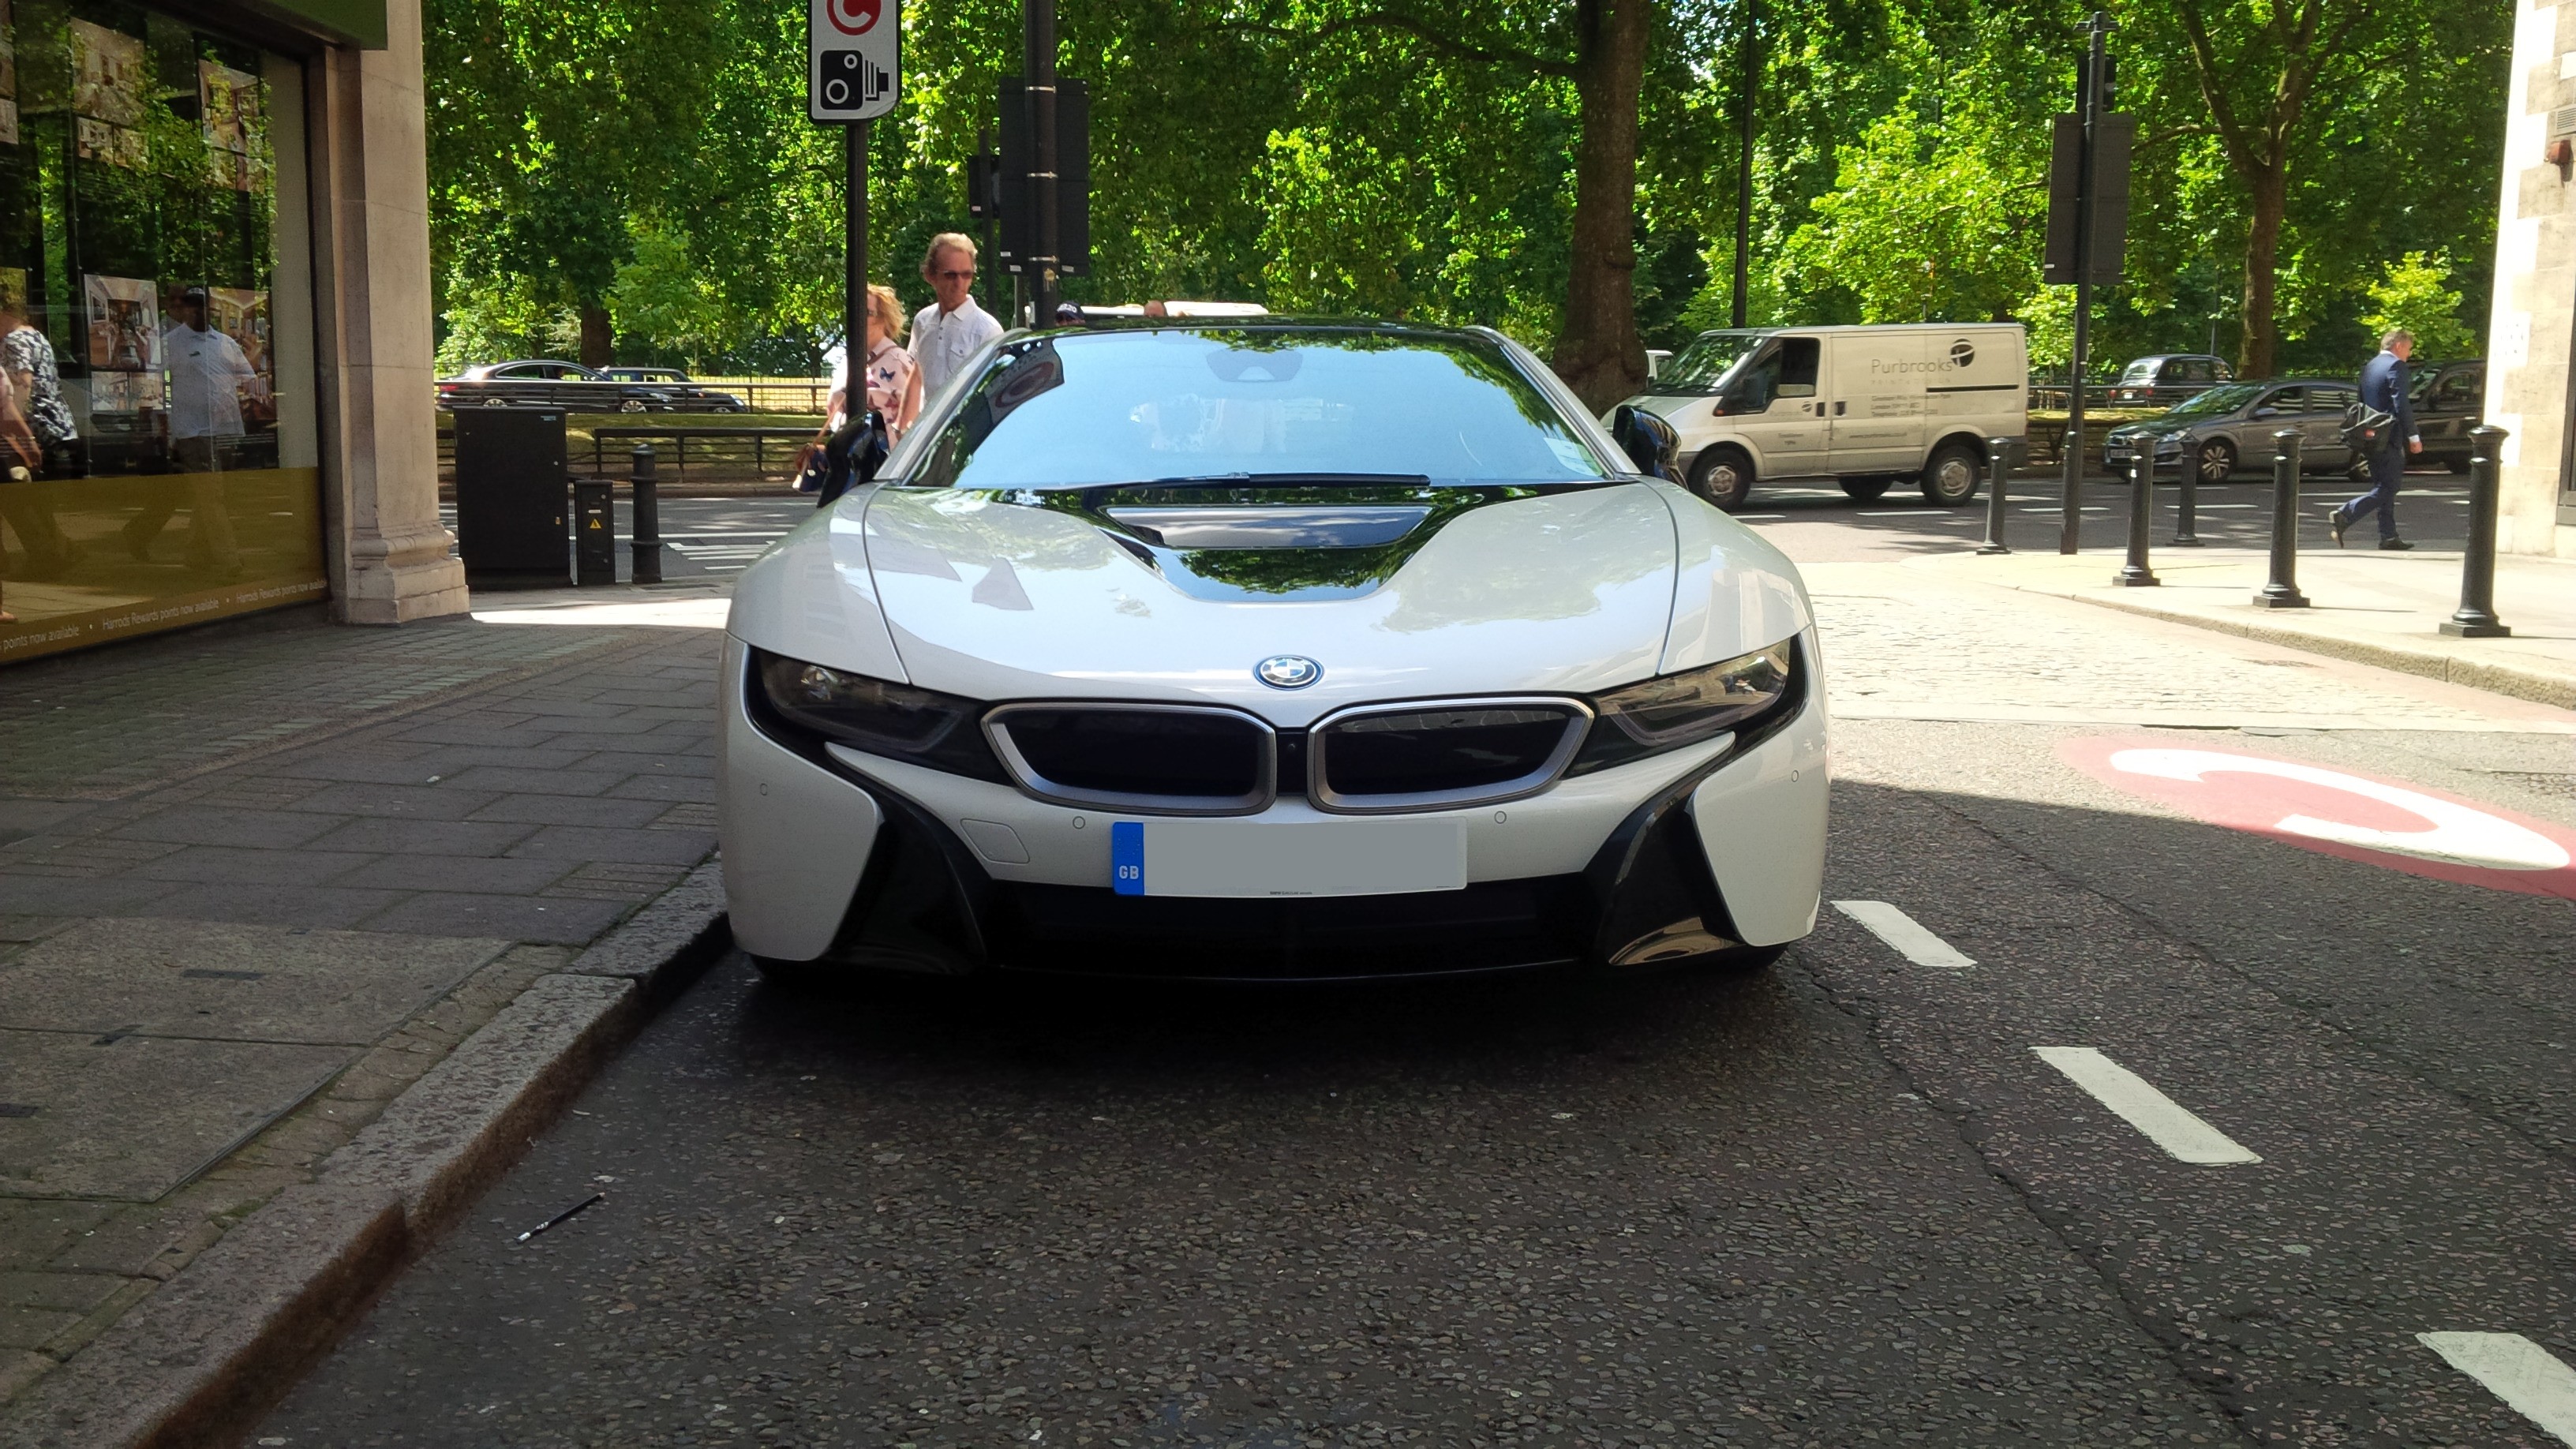 BMW I8, Hyde Park, London, Car Wallpaper